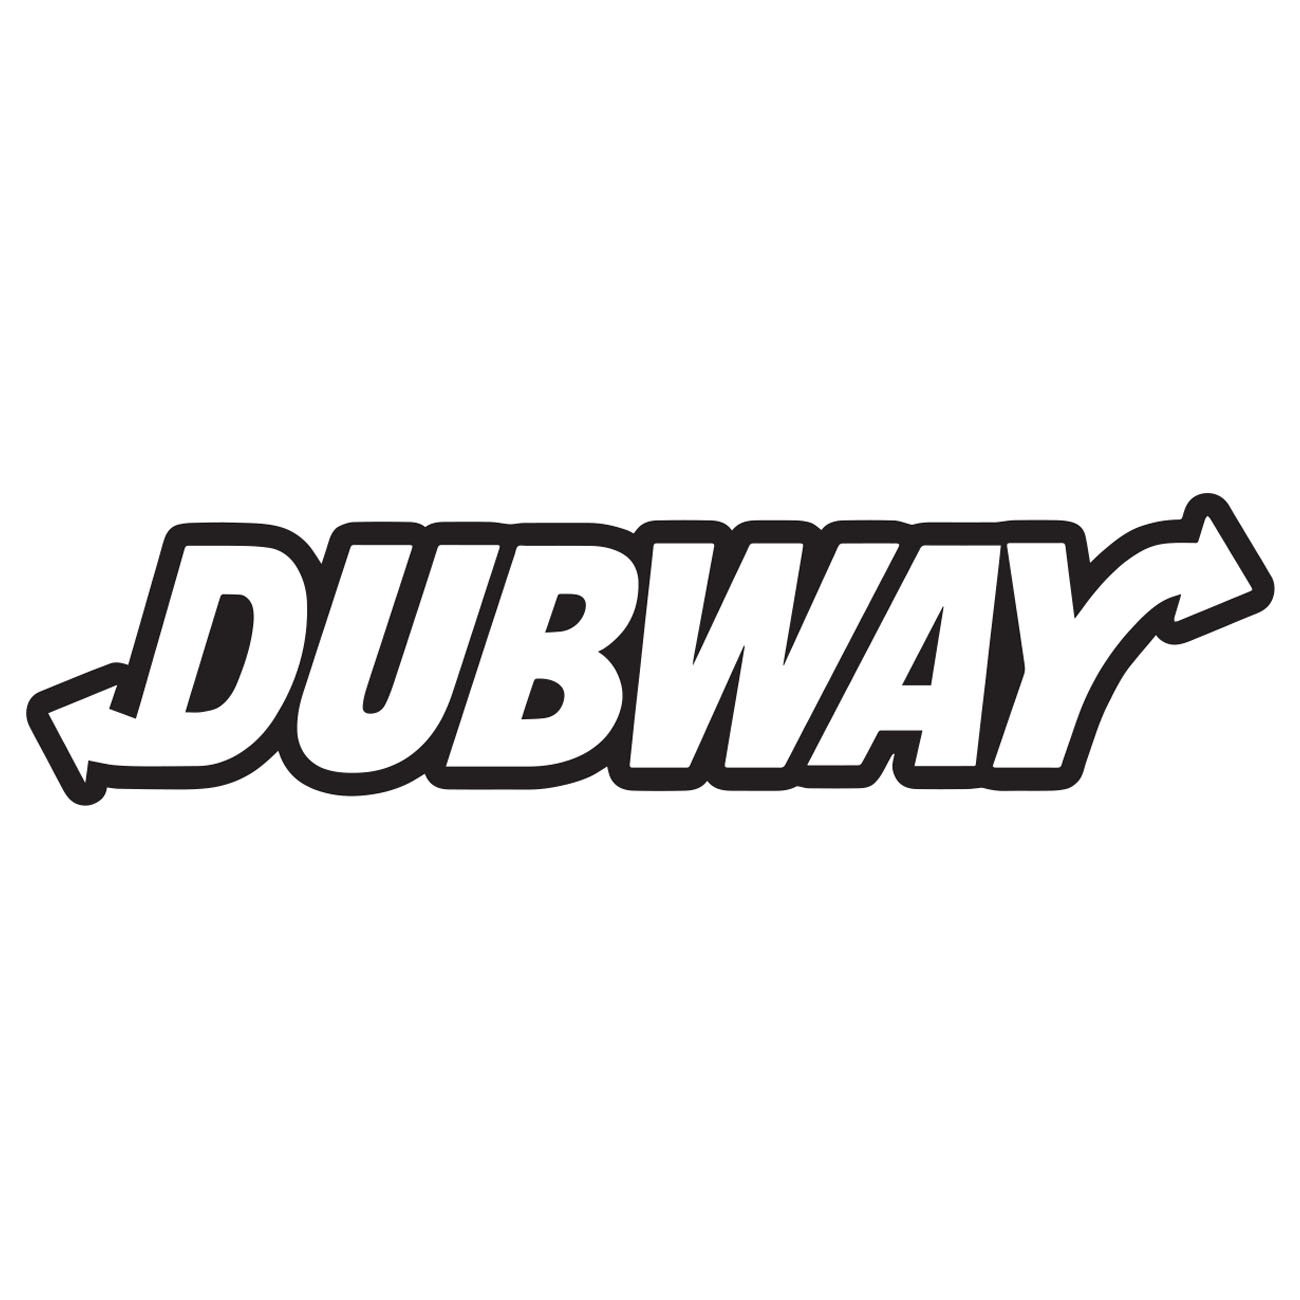 Dubway